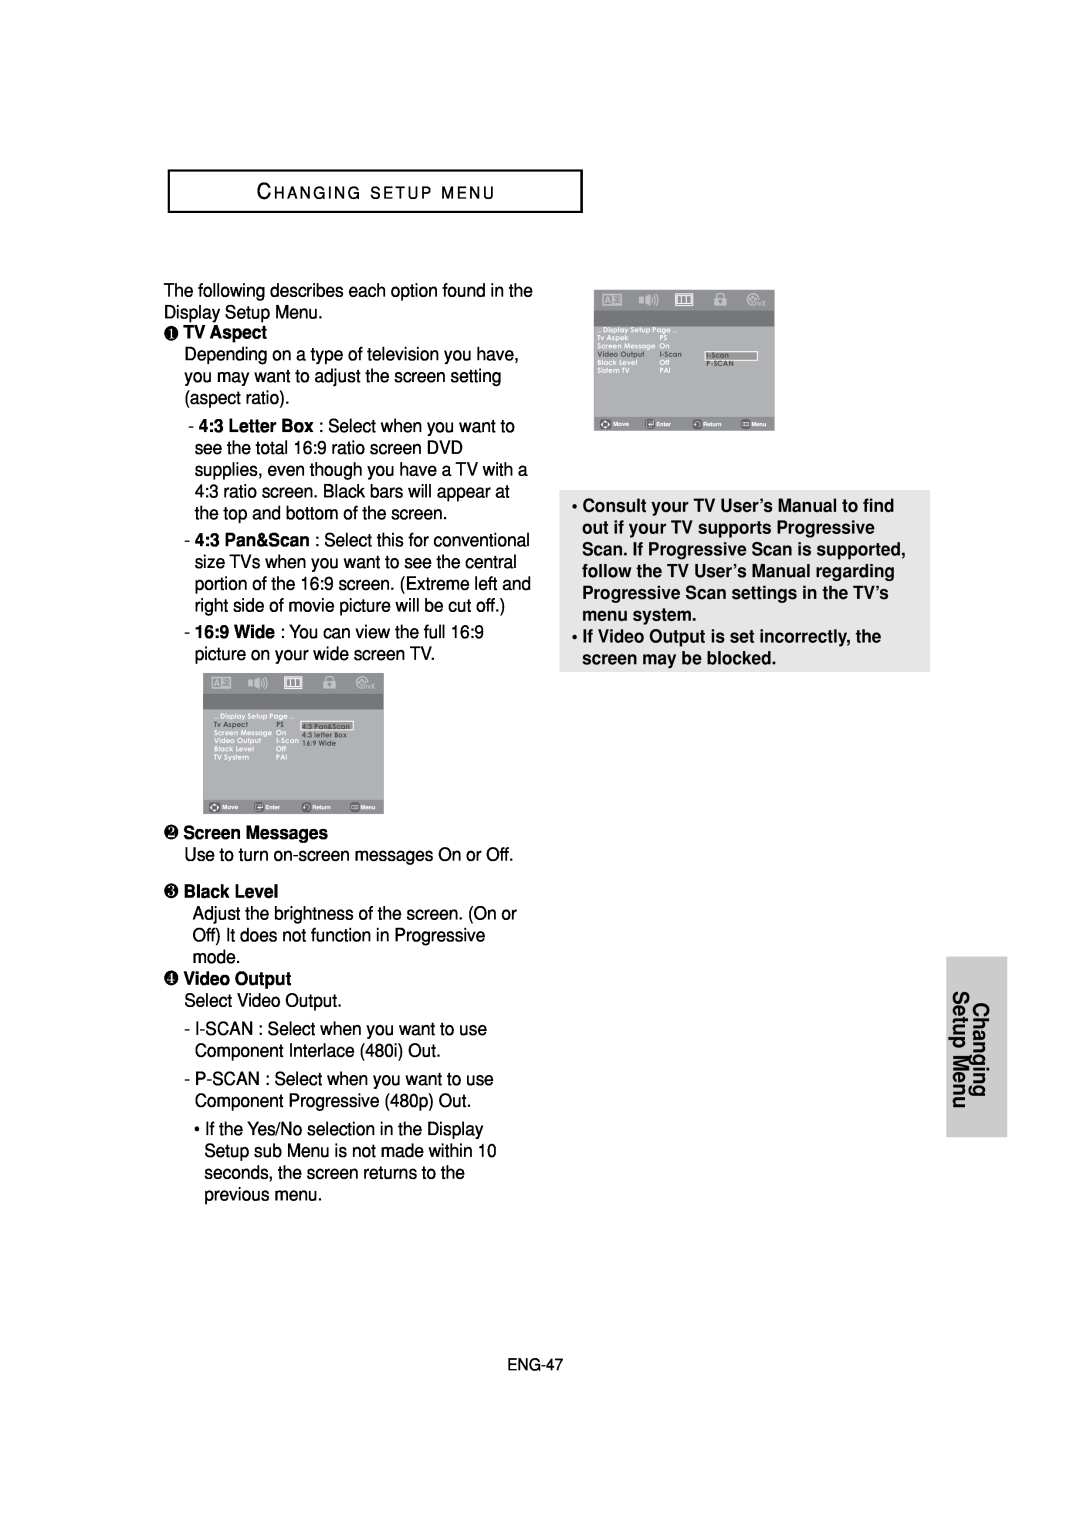 Samsung DVD-P181 ❶ TV Aspect, ❷ Screen Messages, ❸ Black Level, ❹ Video Output Select Video Output, Changing Setup Menu 